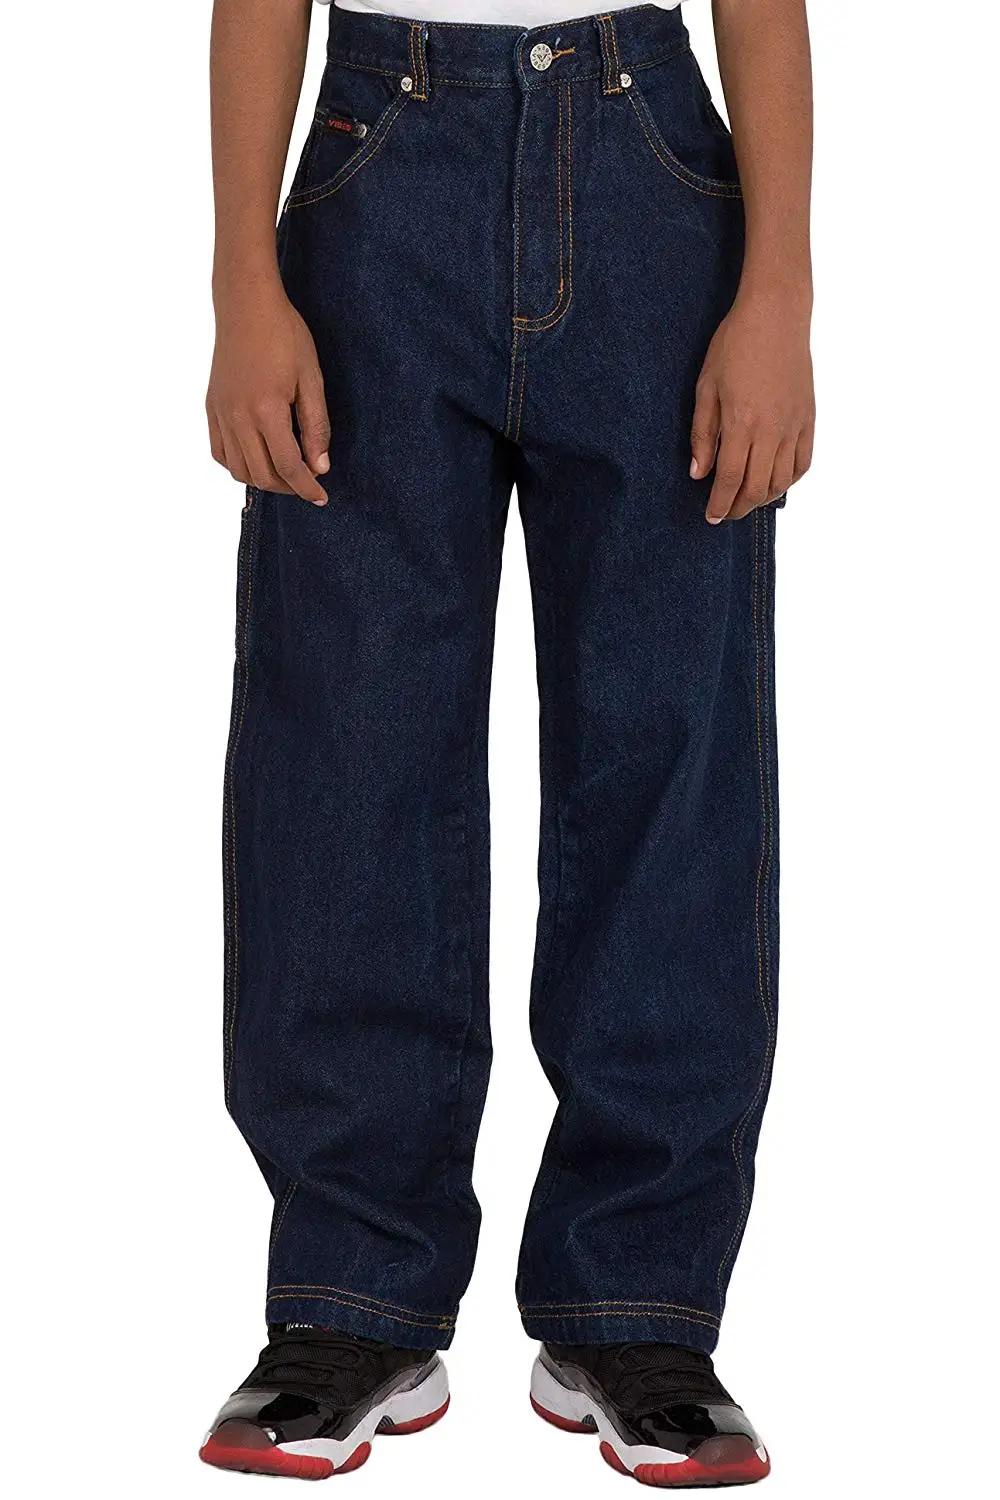 Cheap 8 Oz Denim Jeans, find 8 Oz Denim Jeans deals on line at Alibaba.com